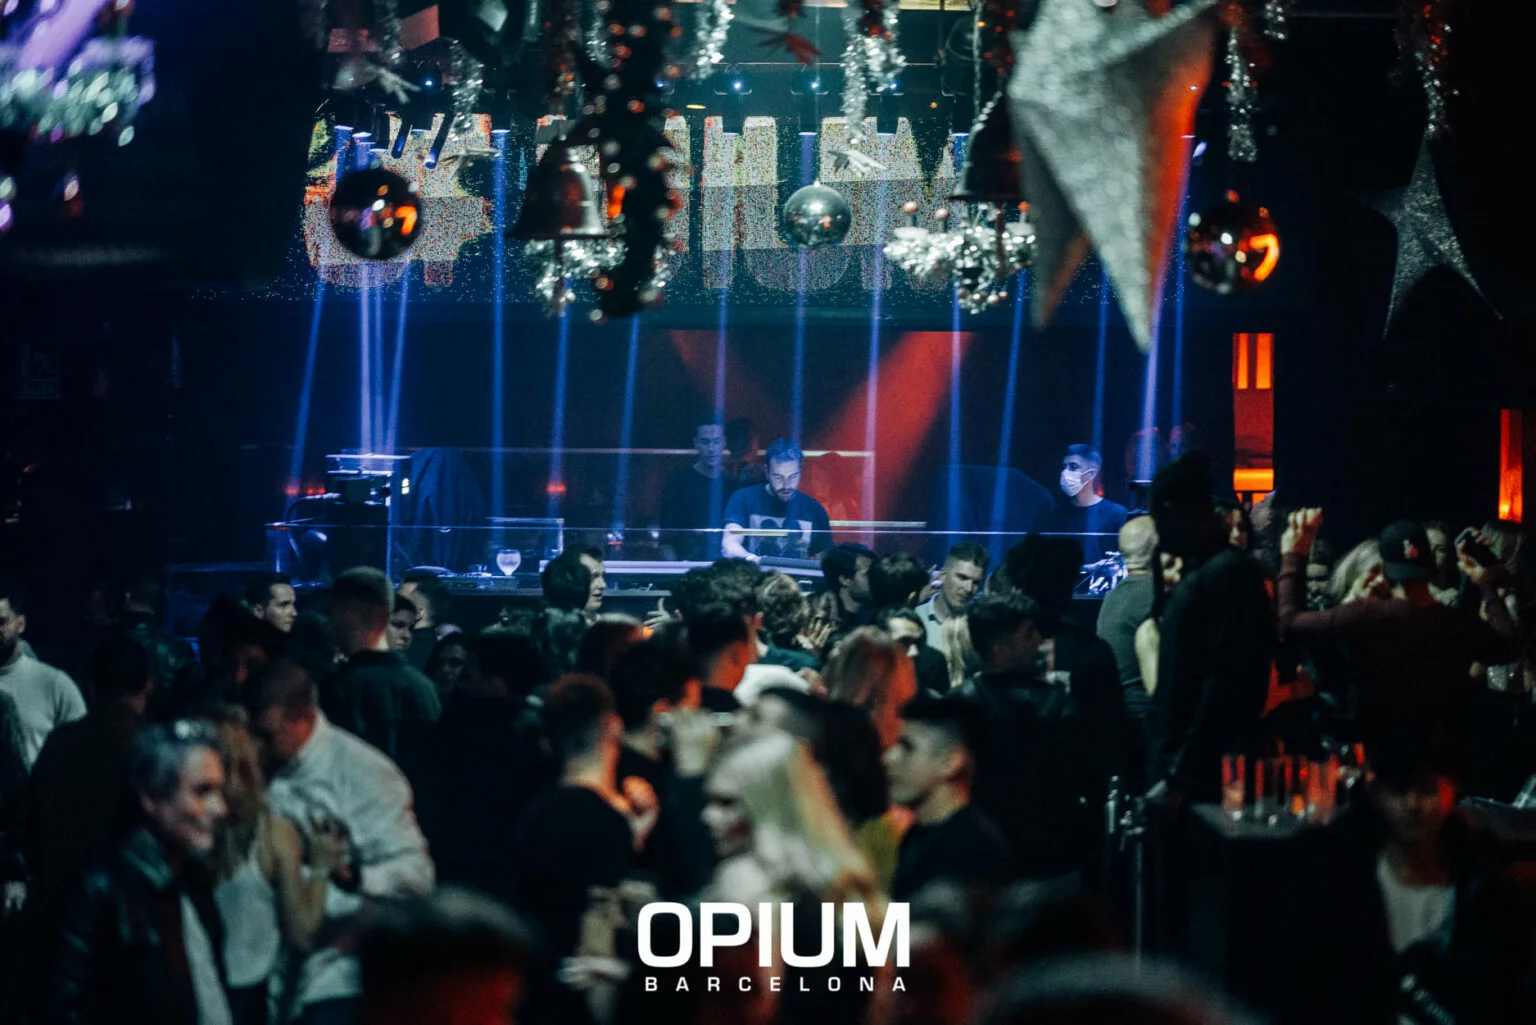 crowds-dancing-inside-opium-barcelona